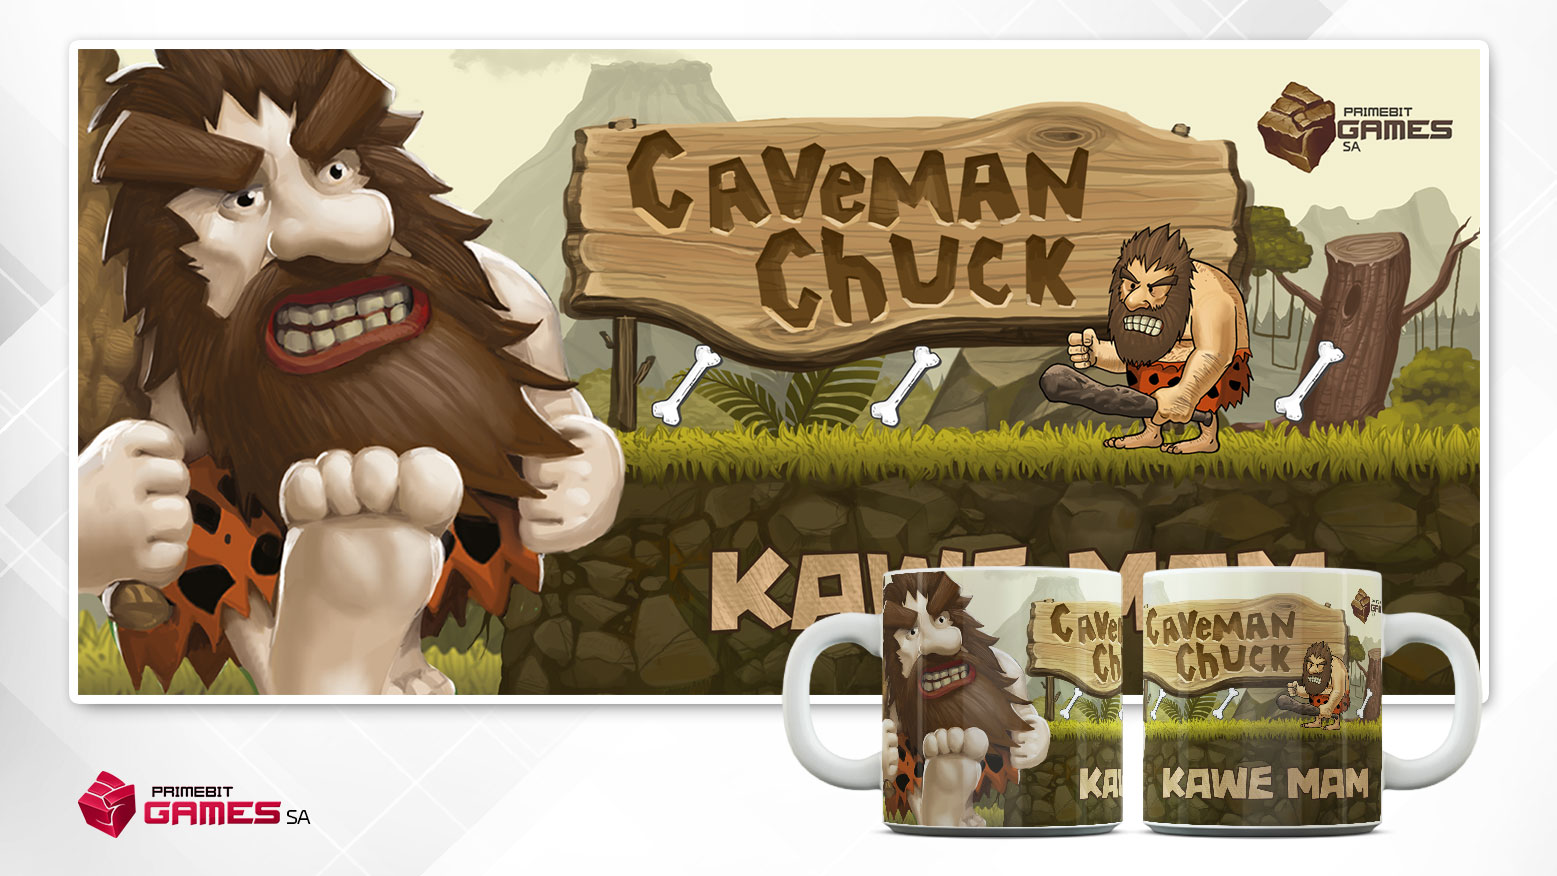 Kubek - Caveman Chuck 2